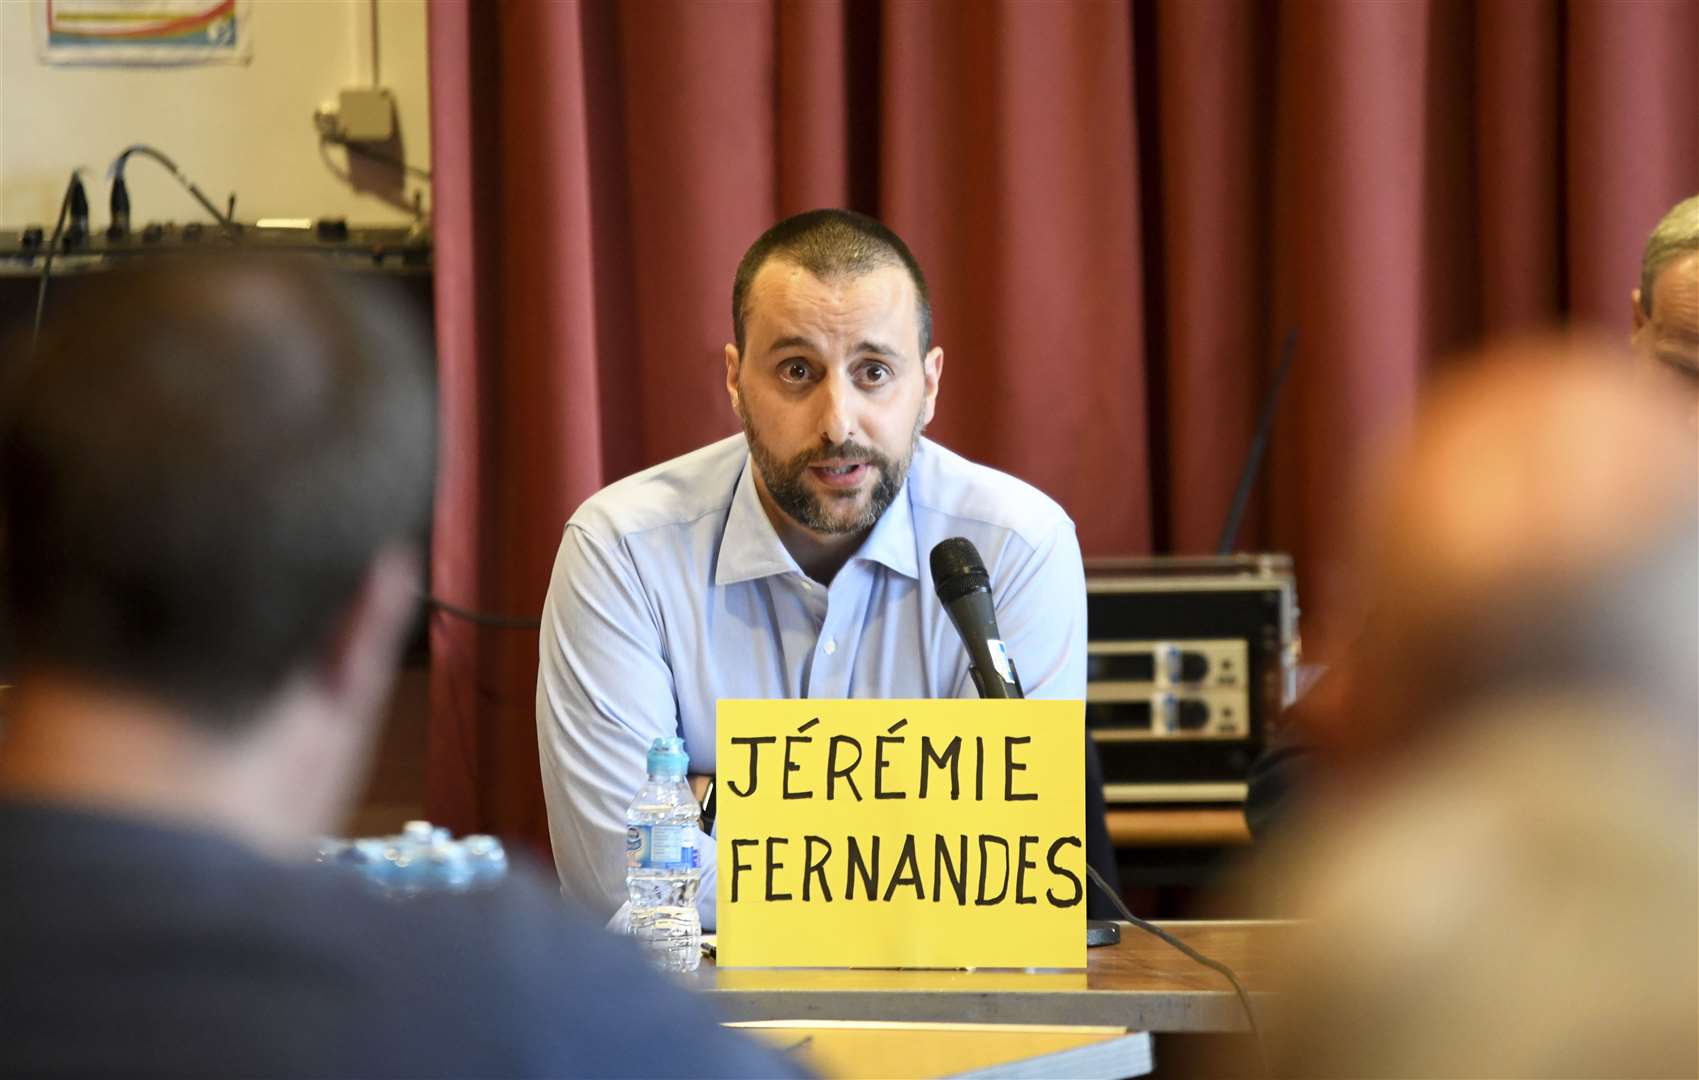 Jérémie Fernandes wrote to the “big five” energy companies.